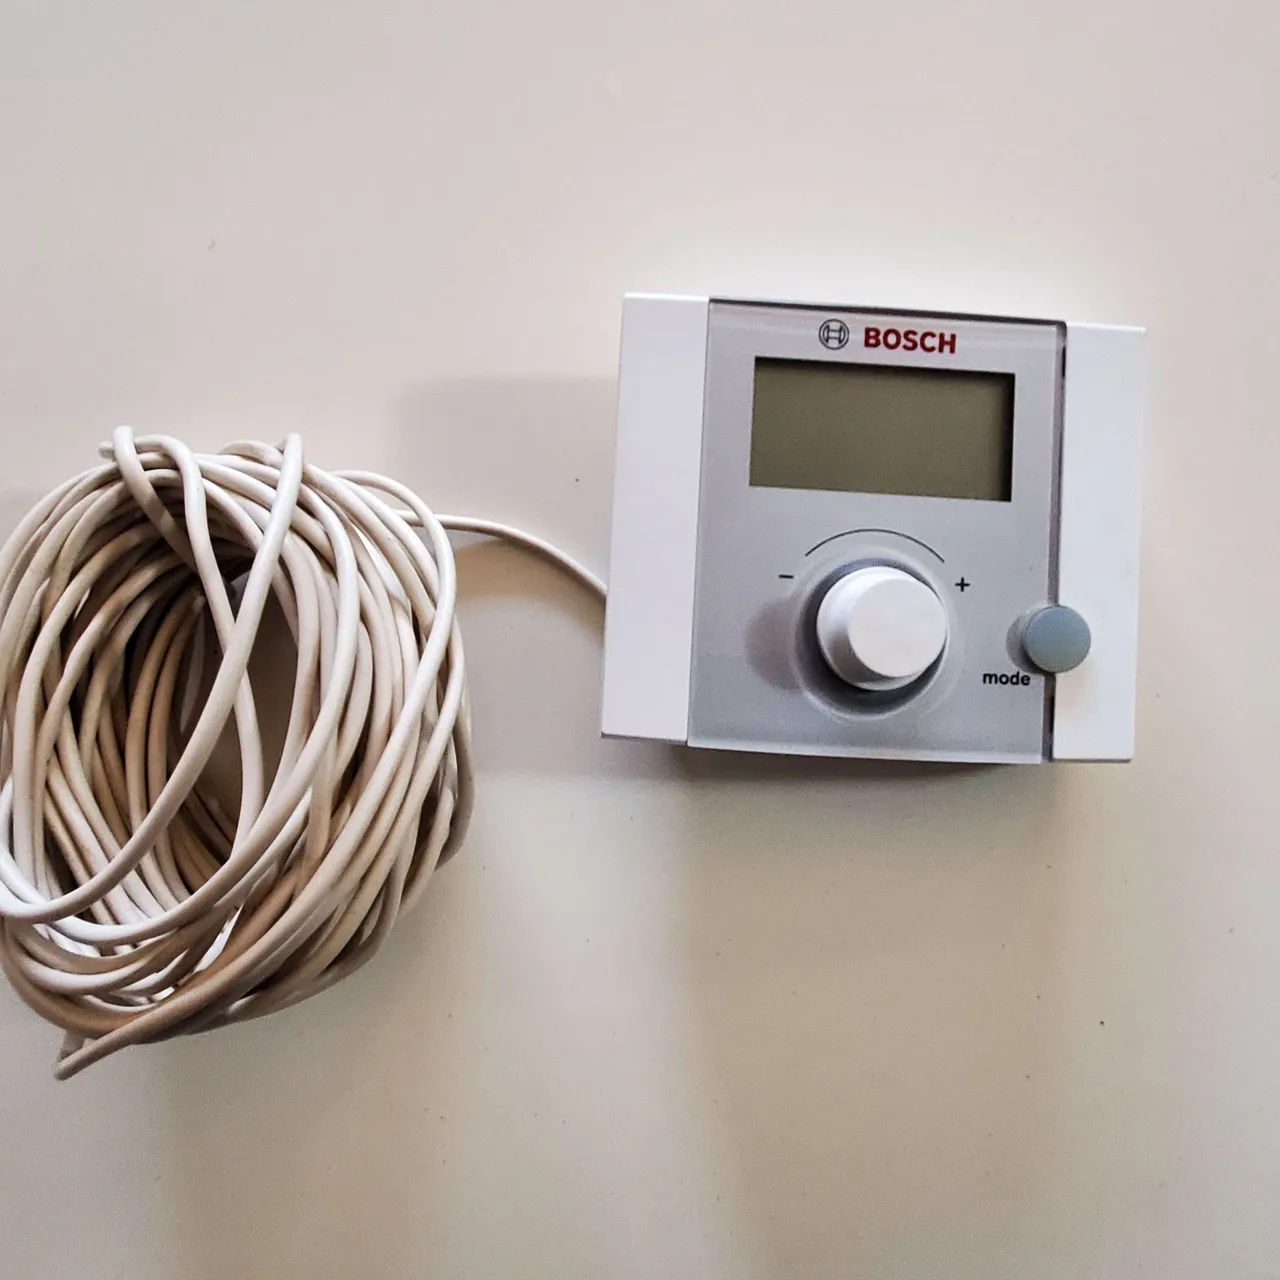 Bosch thermostat photo 1